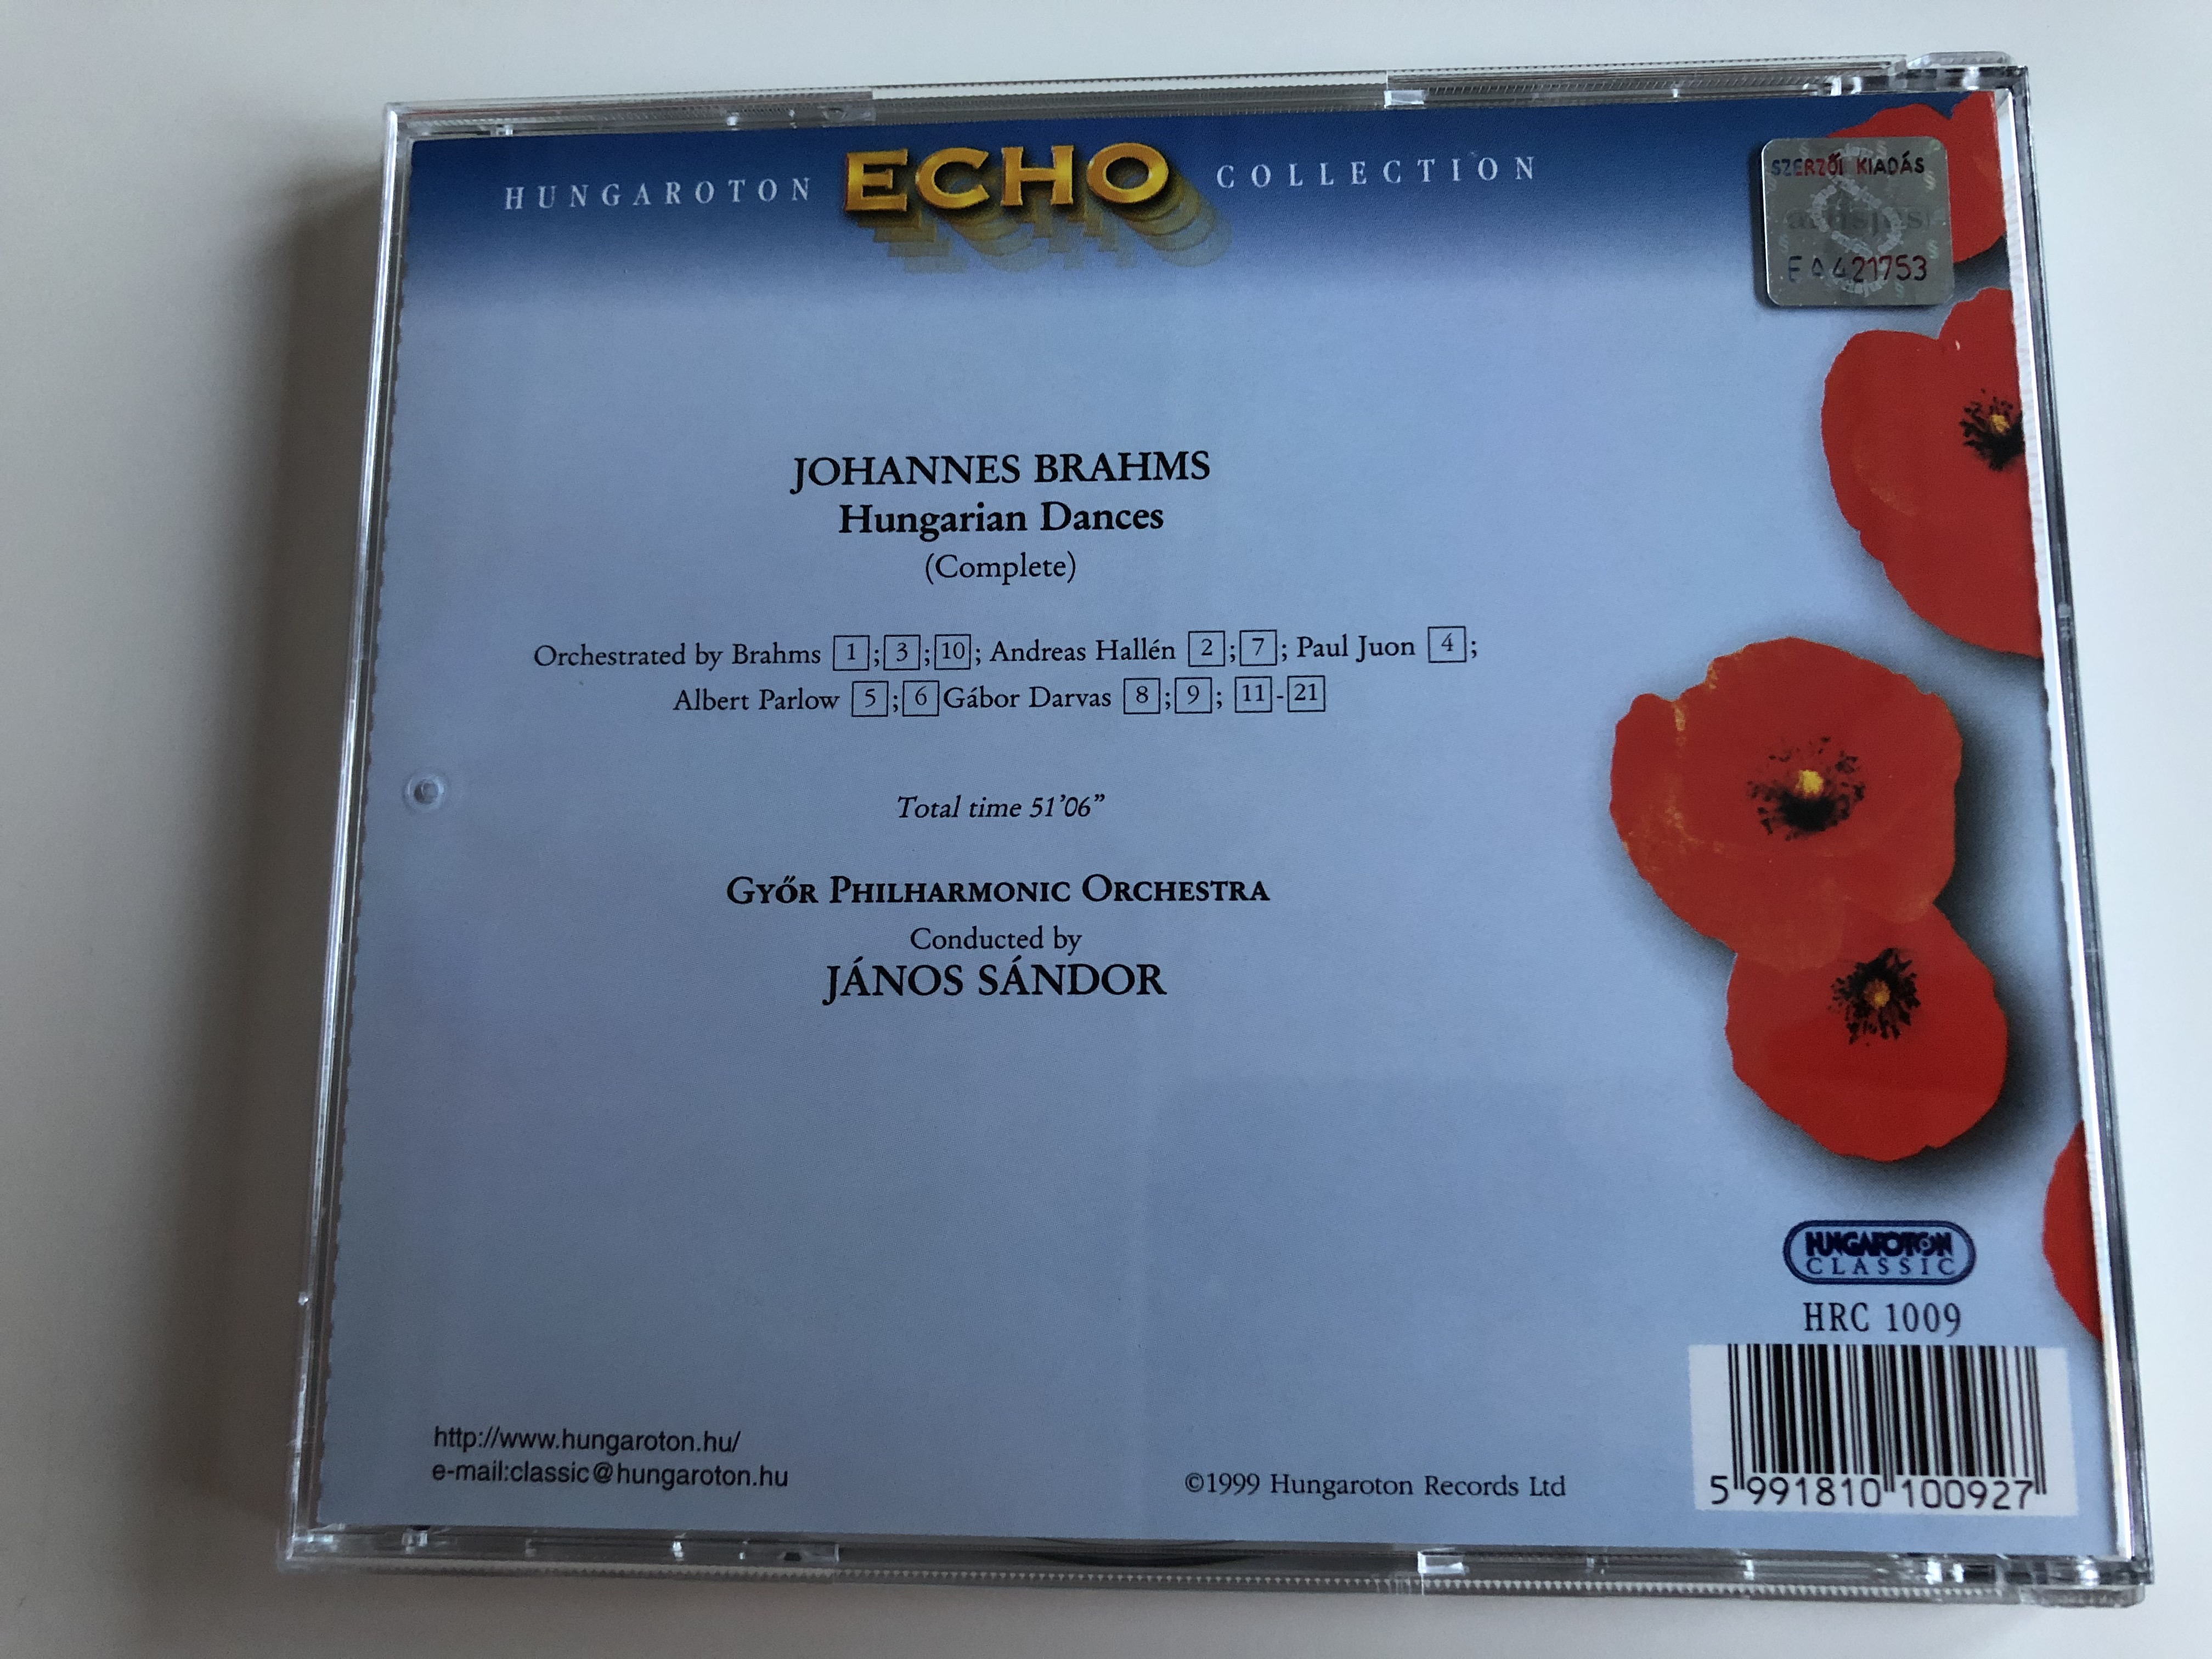 brahms-hungarian-dances-gyor-philharmonic-orchestra-janos-sandor-hungaroton-echo-collection-hungaroton-classic-audio-cd-1999-stereo-hrc-1009-4-.jpg